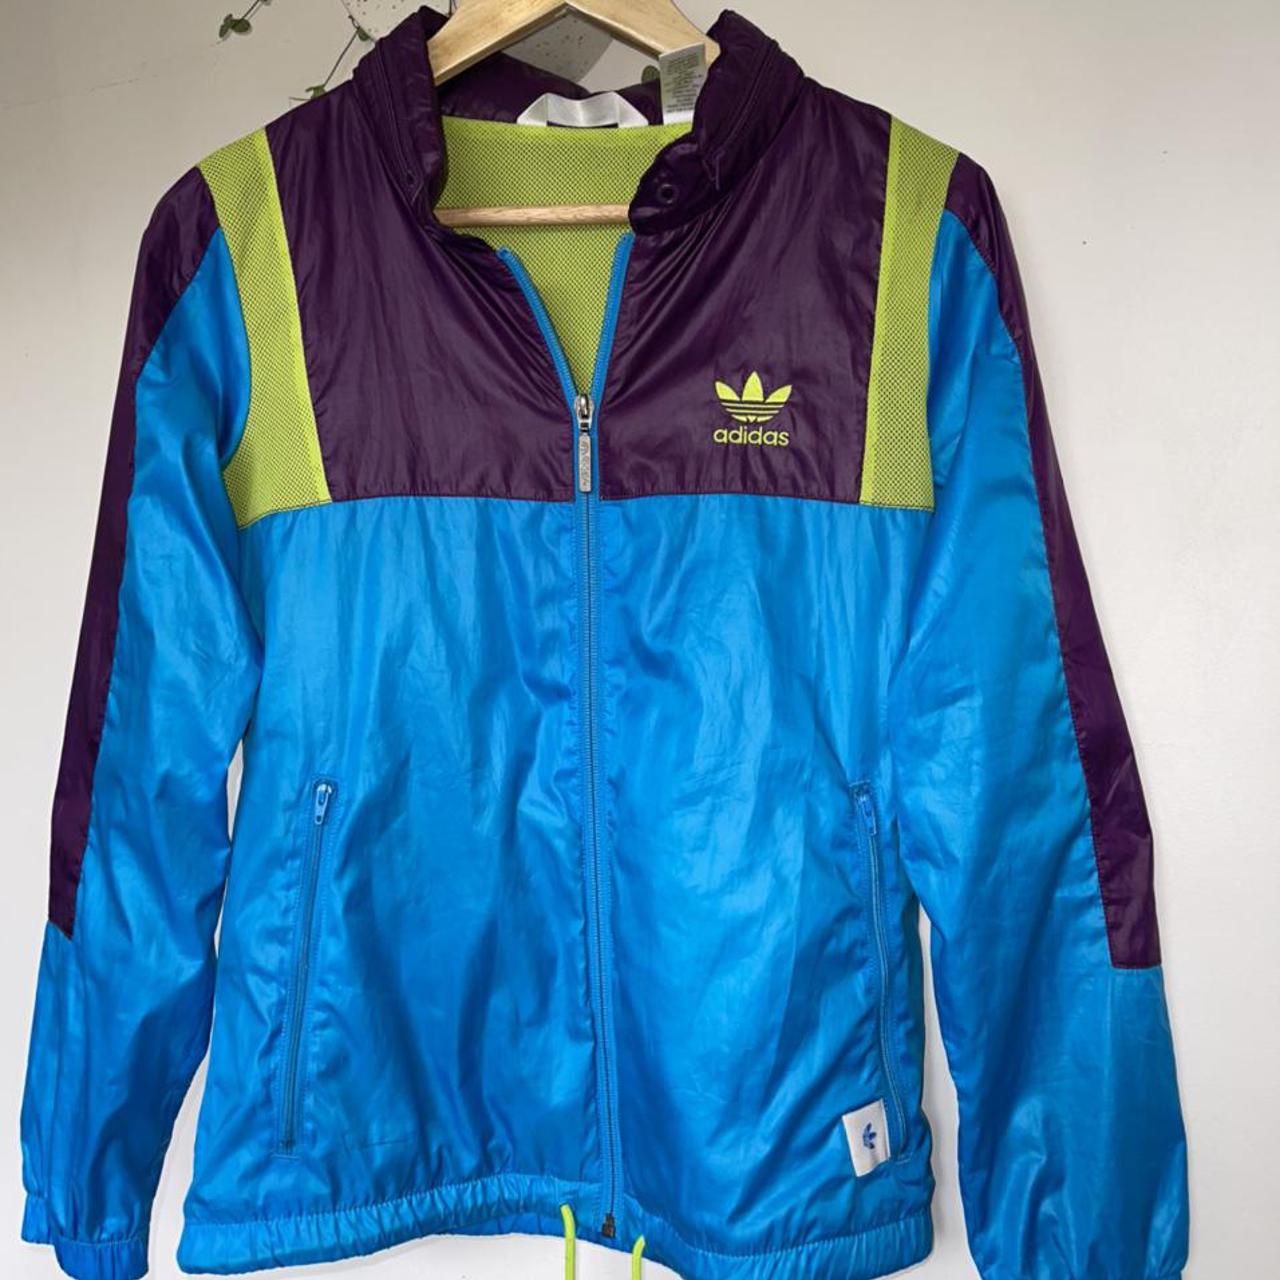 Vintage Adidas Spray jacket Labelled size 8, would... - Depop